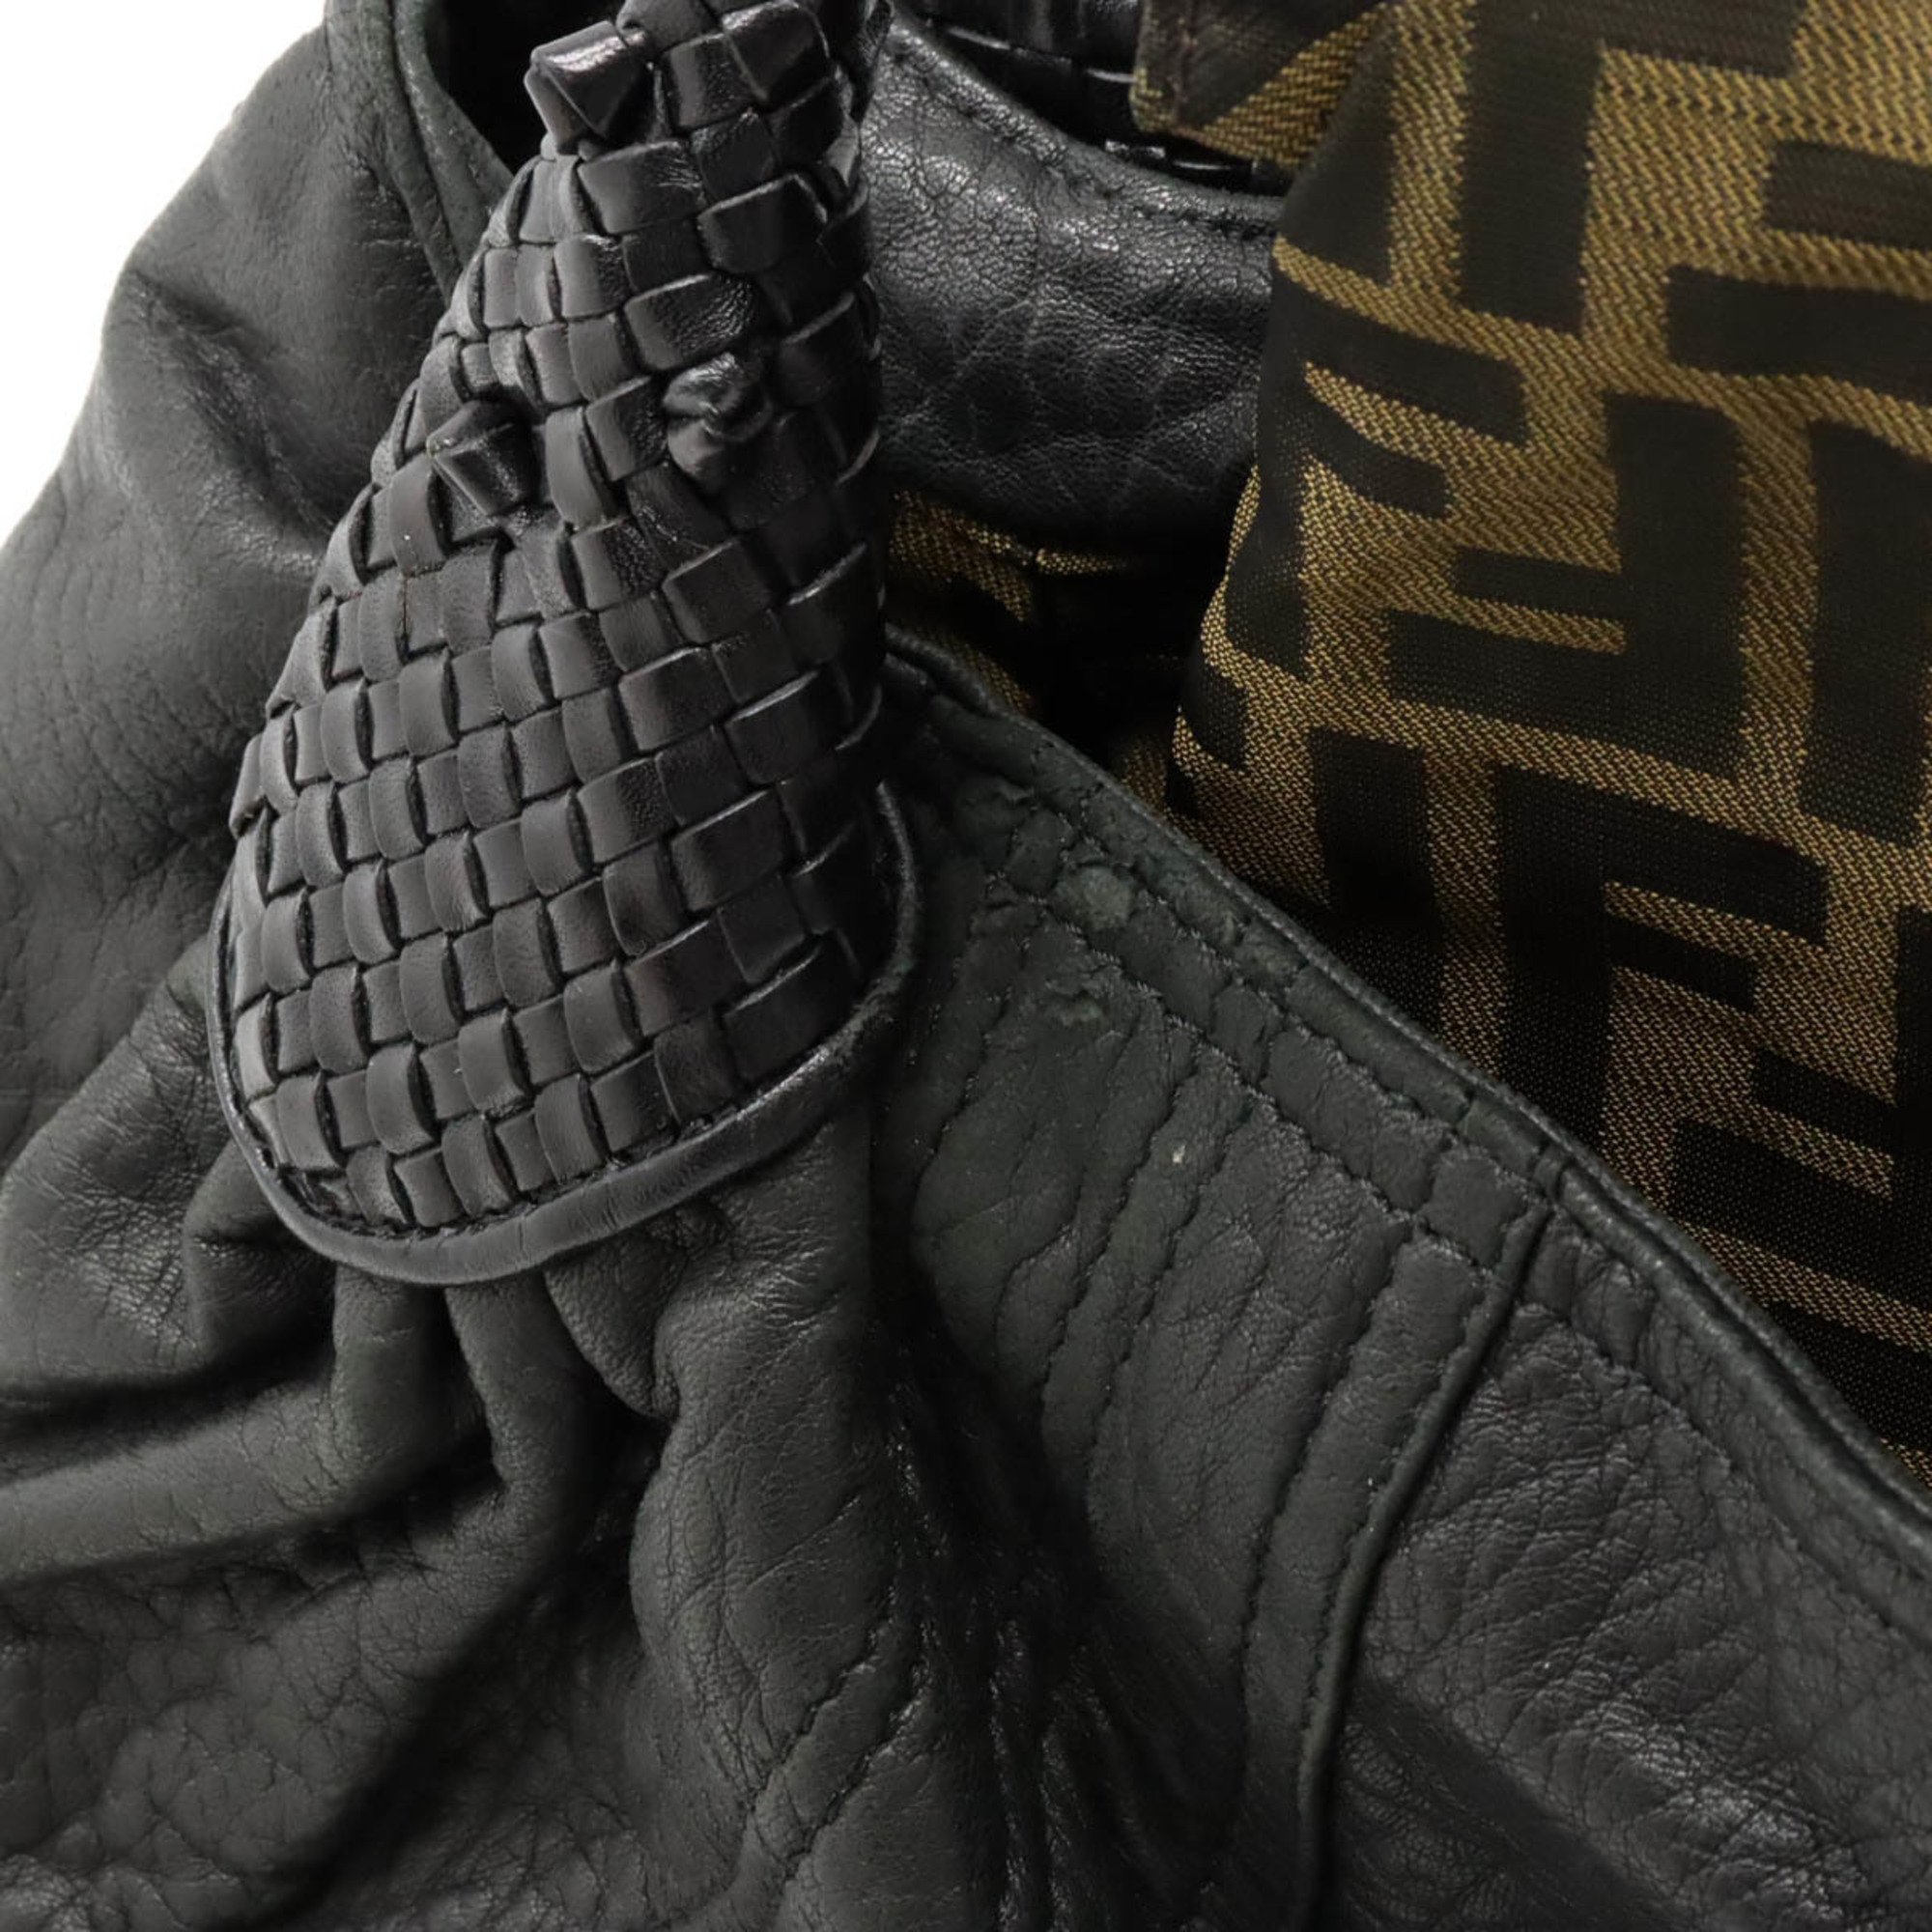 FENDI Spy Bag Handbag Tote Leather Black 8BR511